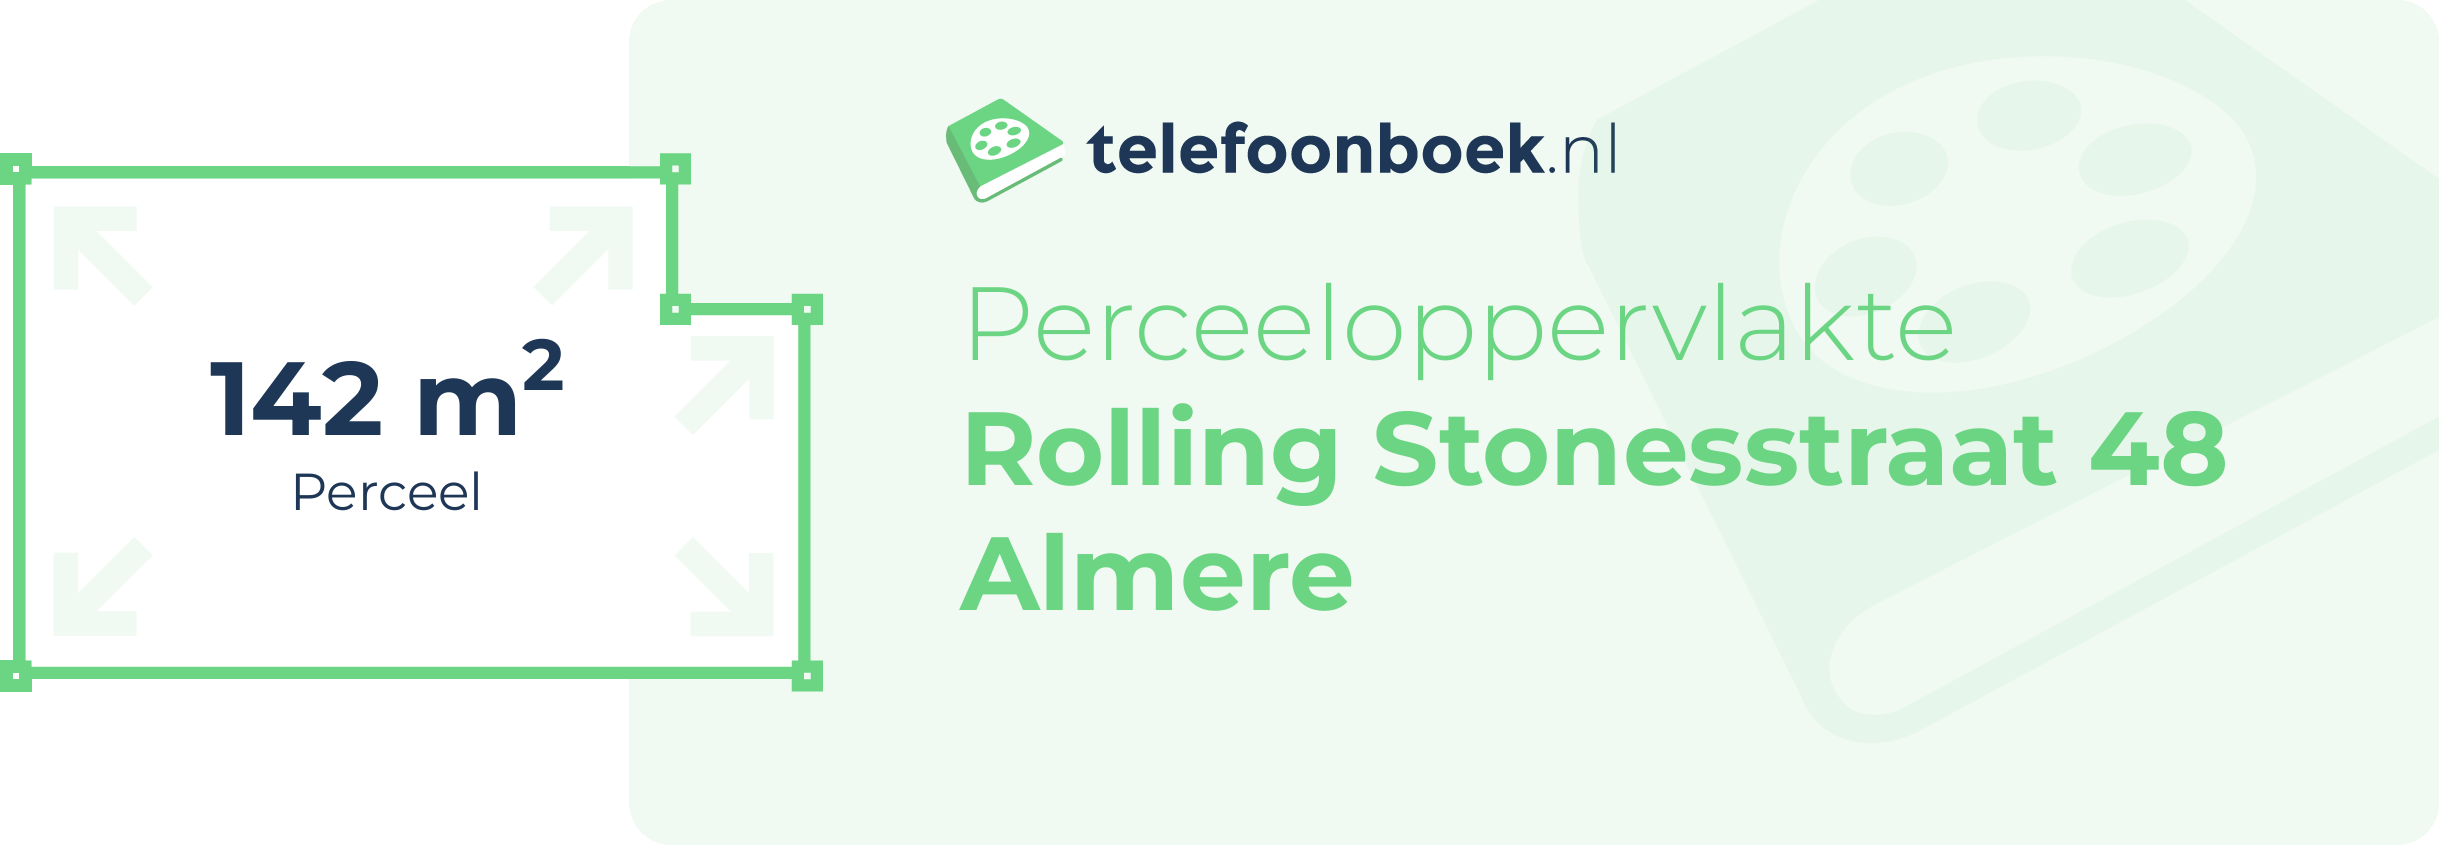 Perceeloppervlakte Rolling Stonesstraat 48 Almere